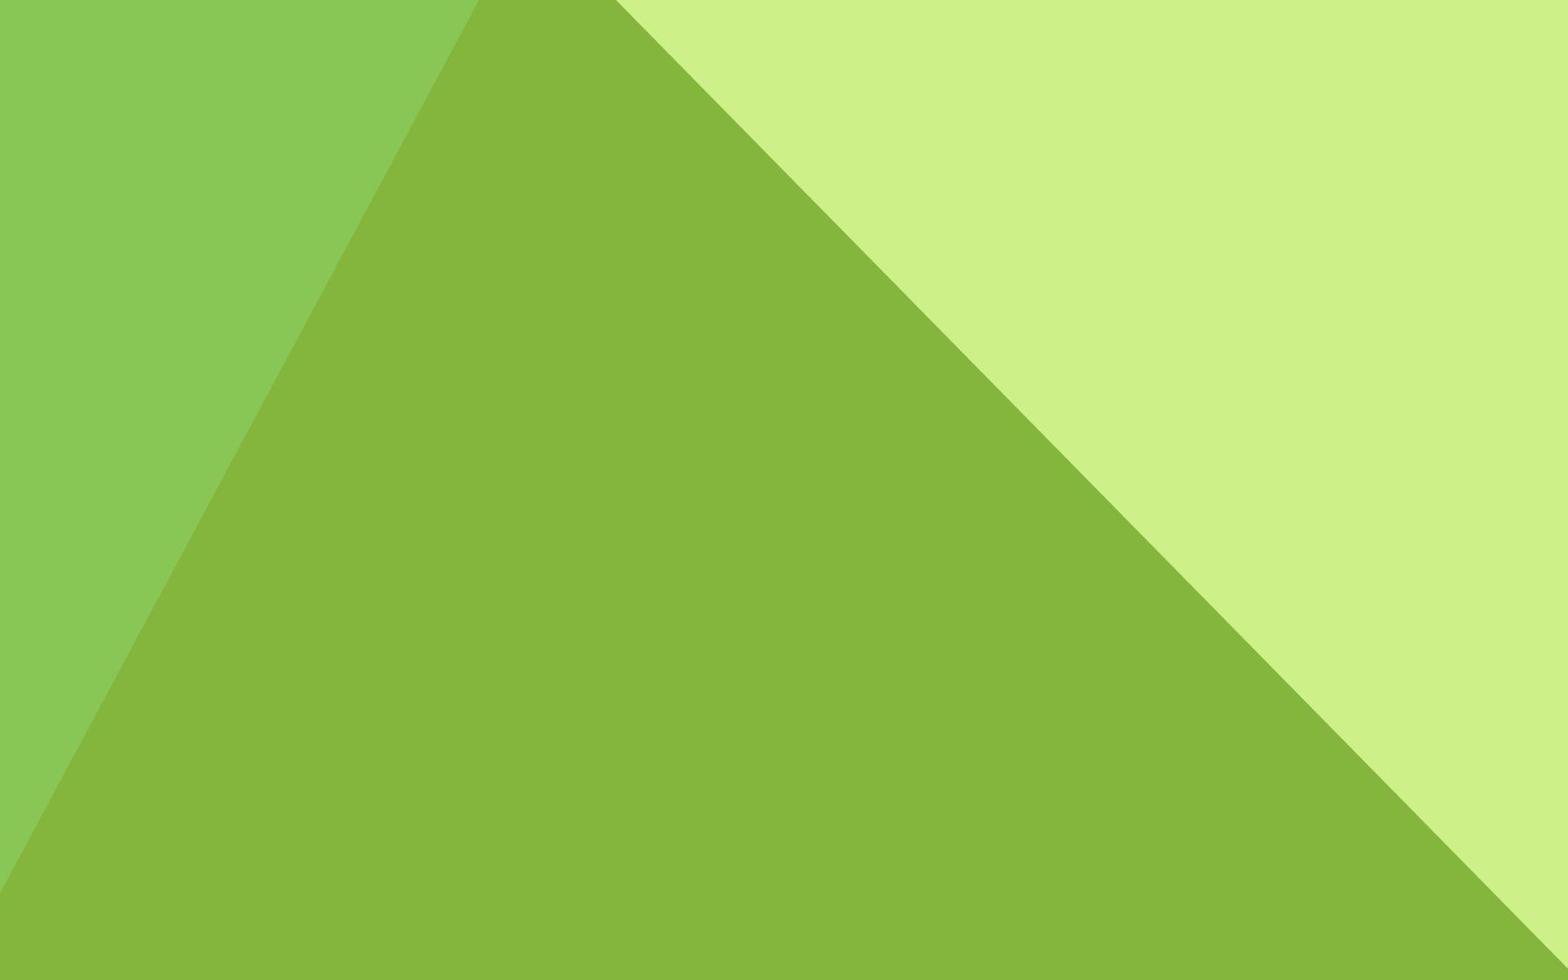 ljusgrön vektor triangel mosaikomslag.